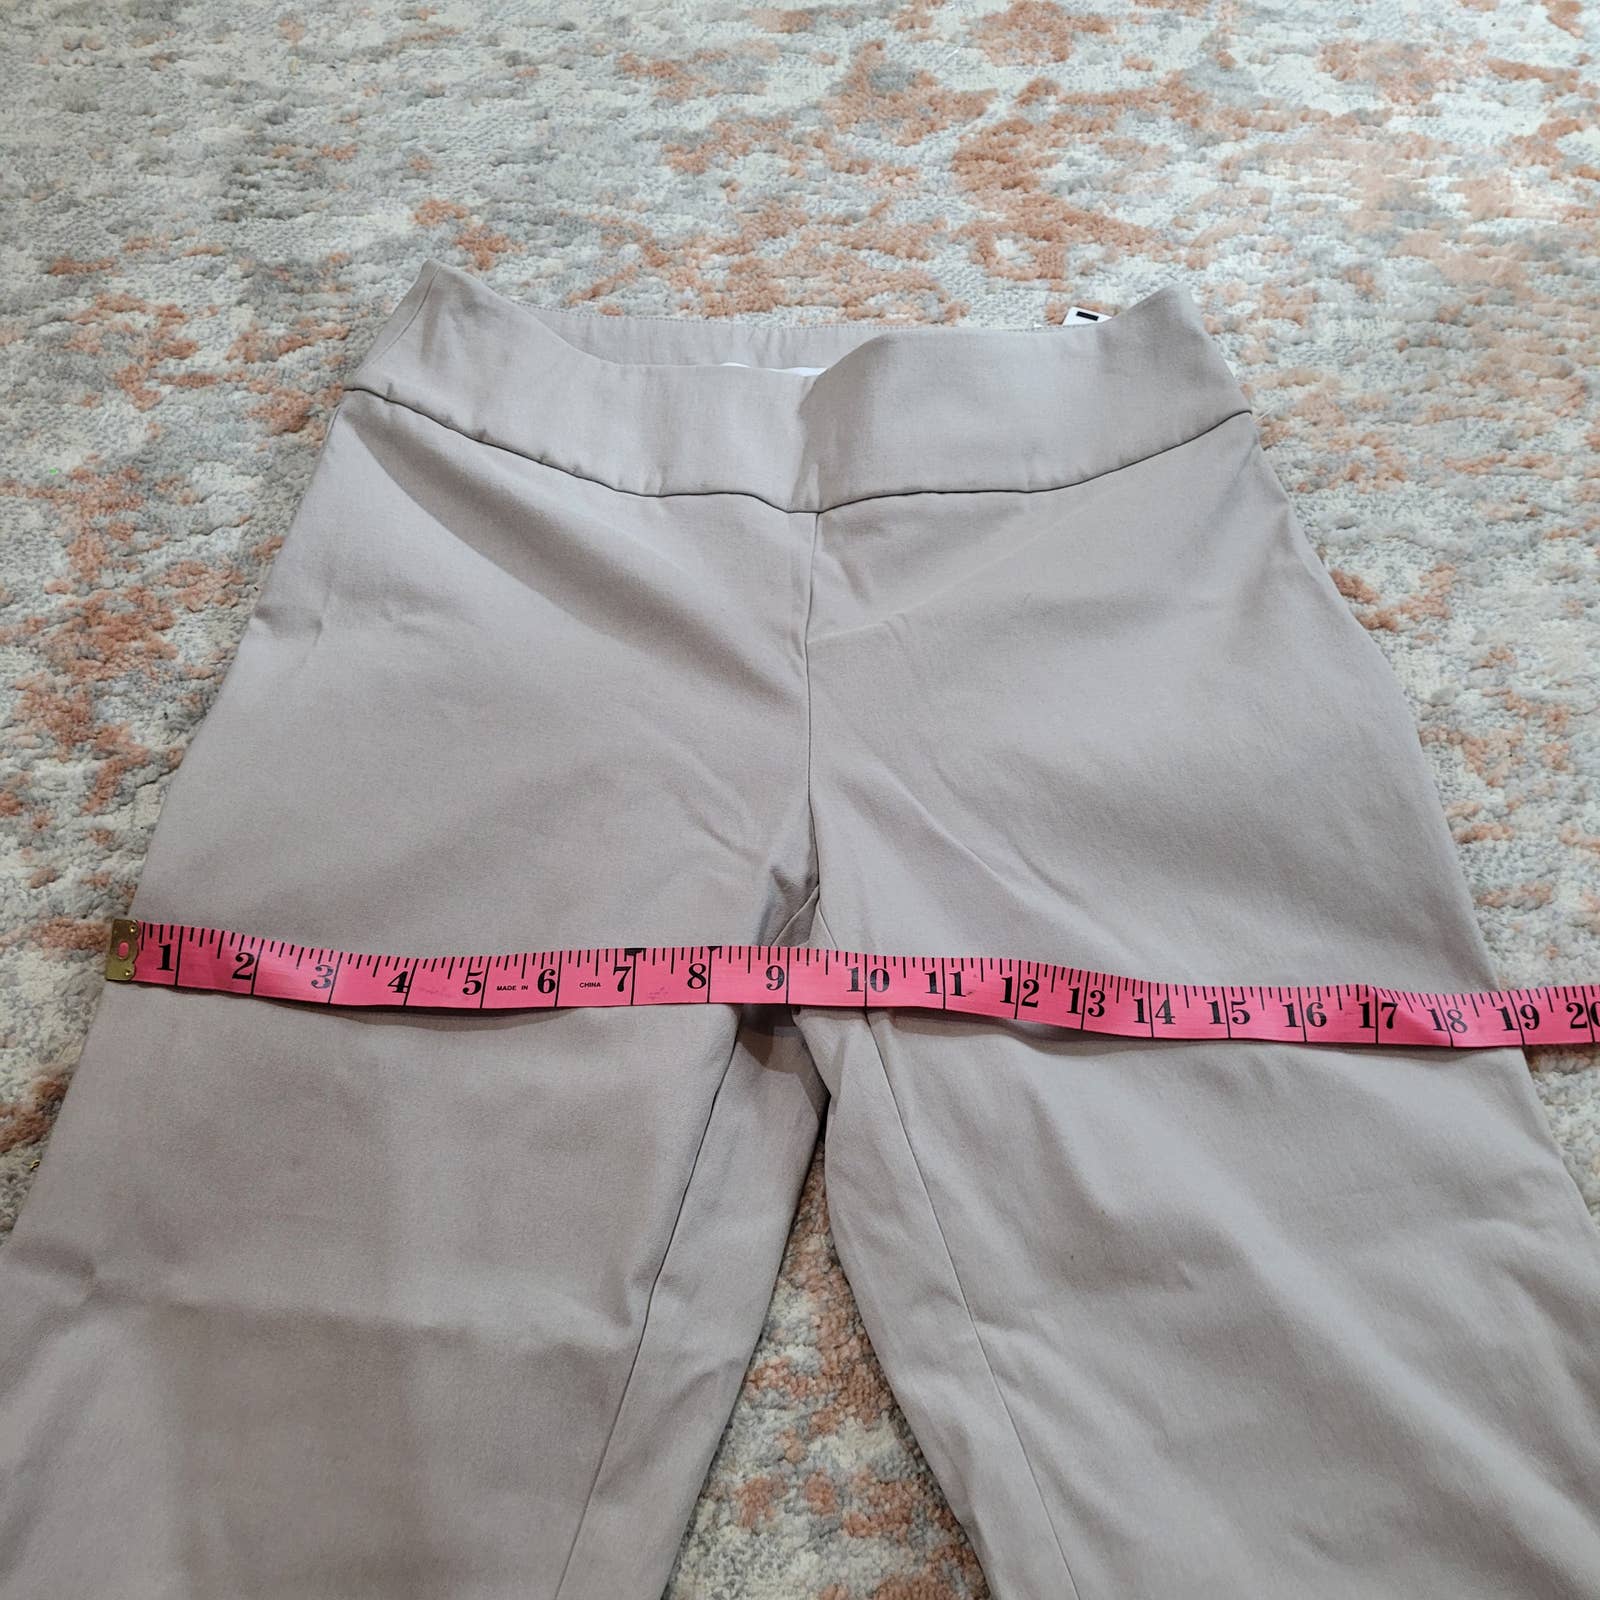 Cleo Ankle Pants with Rhinestone Accents - Size Extra SmallMarkita's ClosetCleo